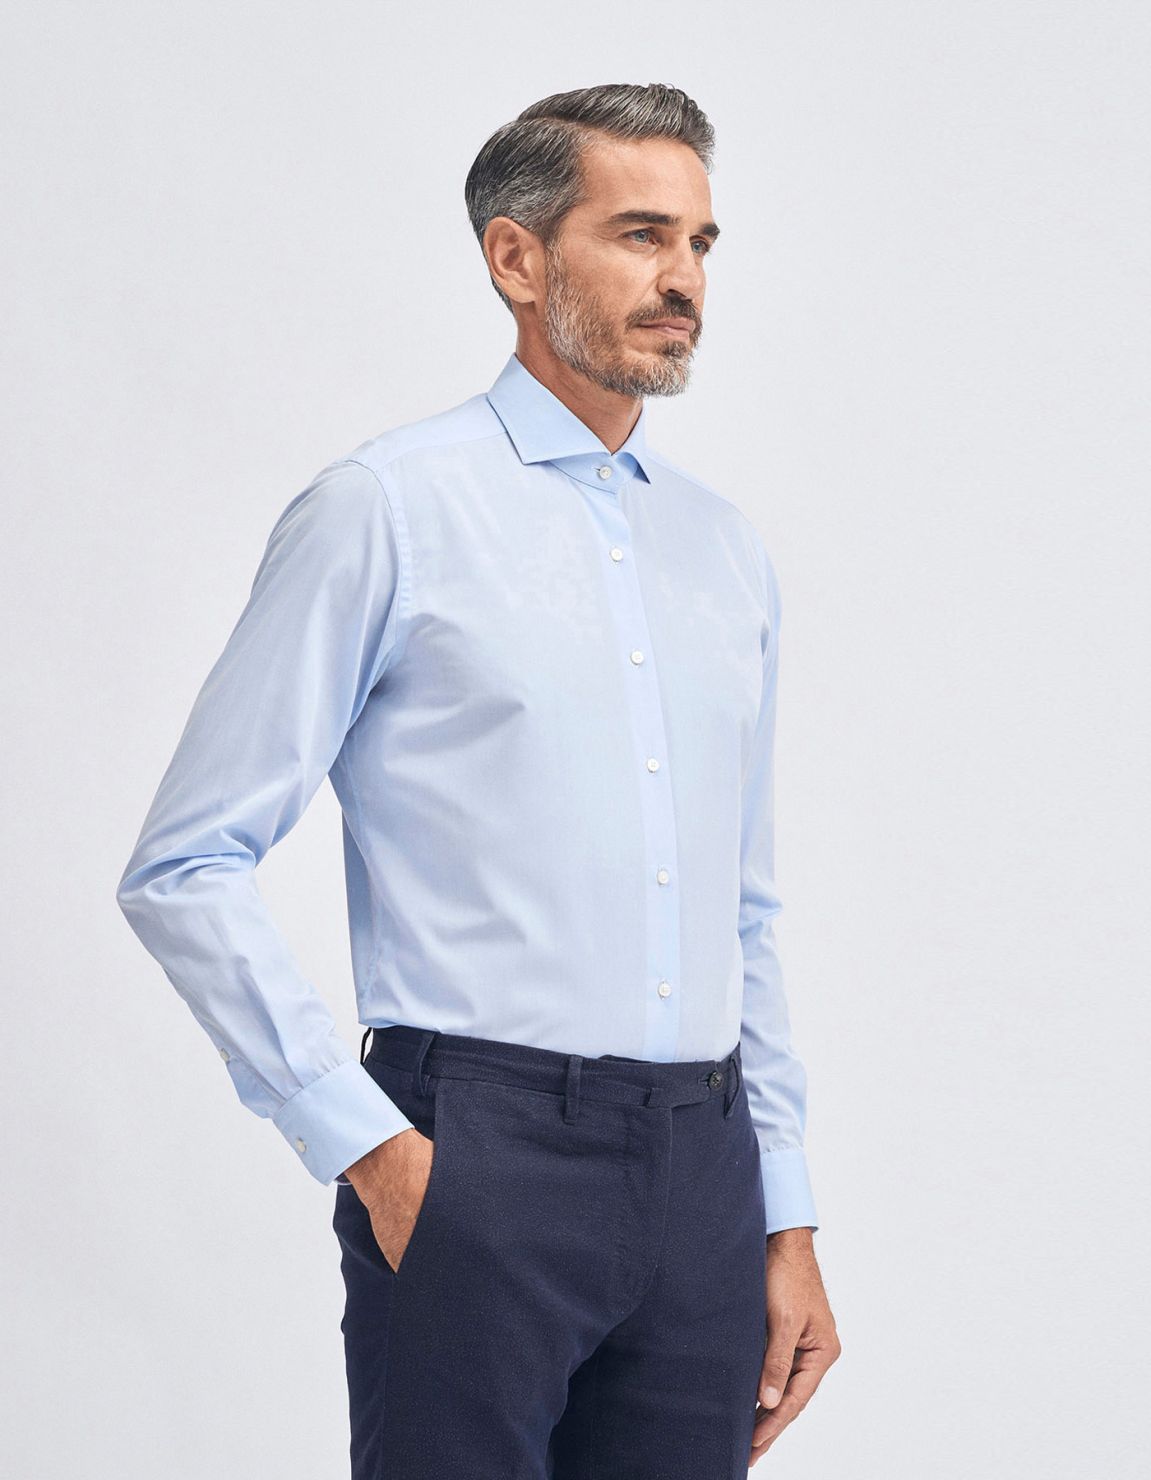 Shirt Collar cutaway Light Blue Poplin Tailor Custom Fit 1